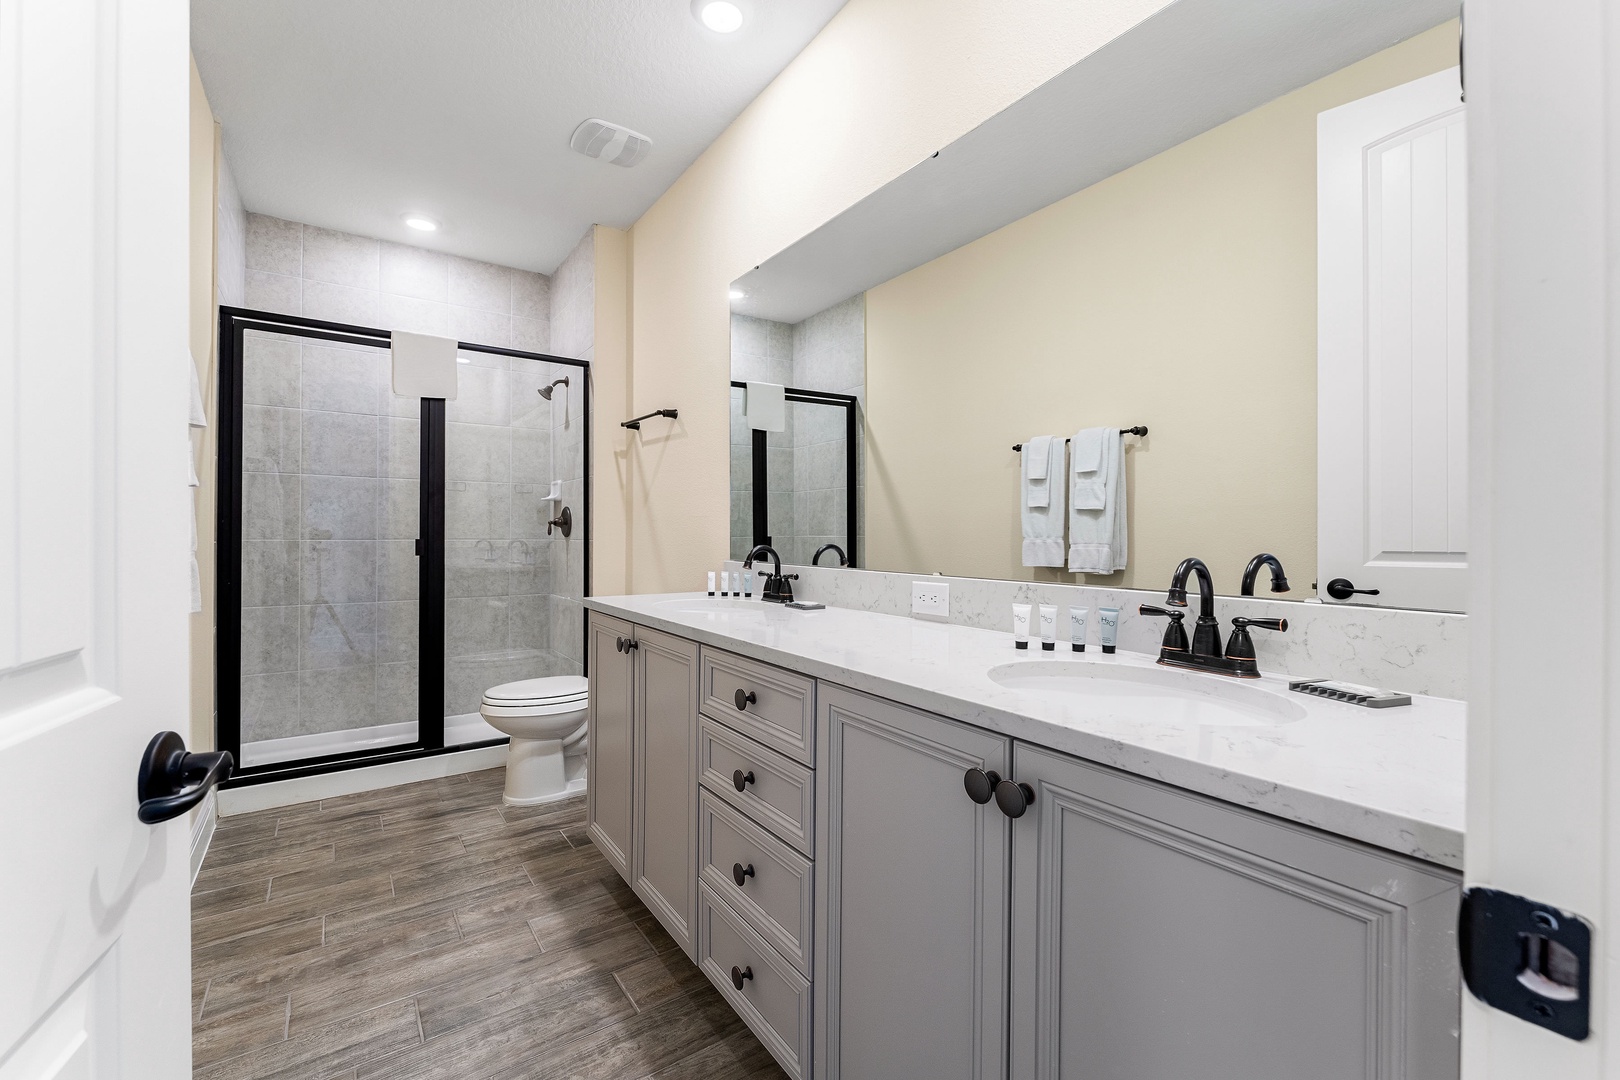 Bathroom 3 en-suite to bedroom 4 located on second floor with dual vanity and glass walk in shower